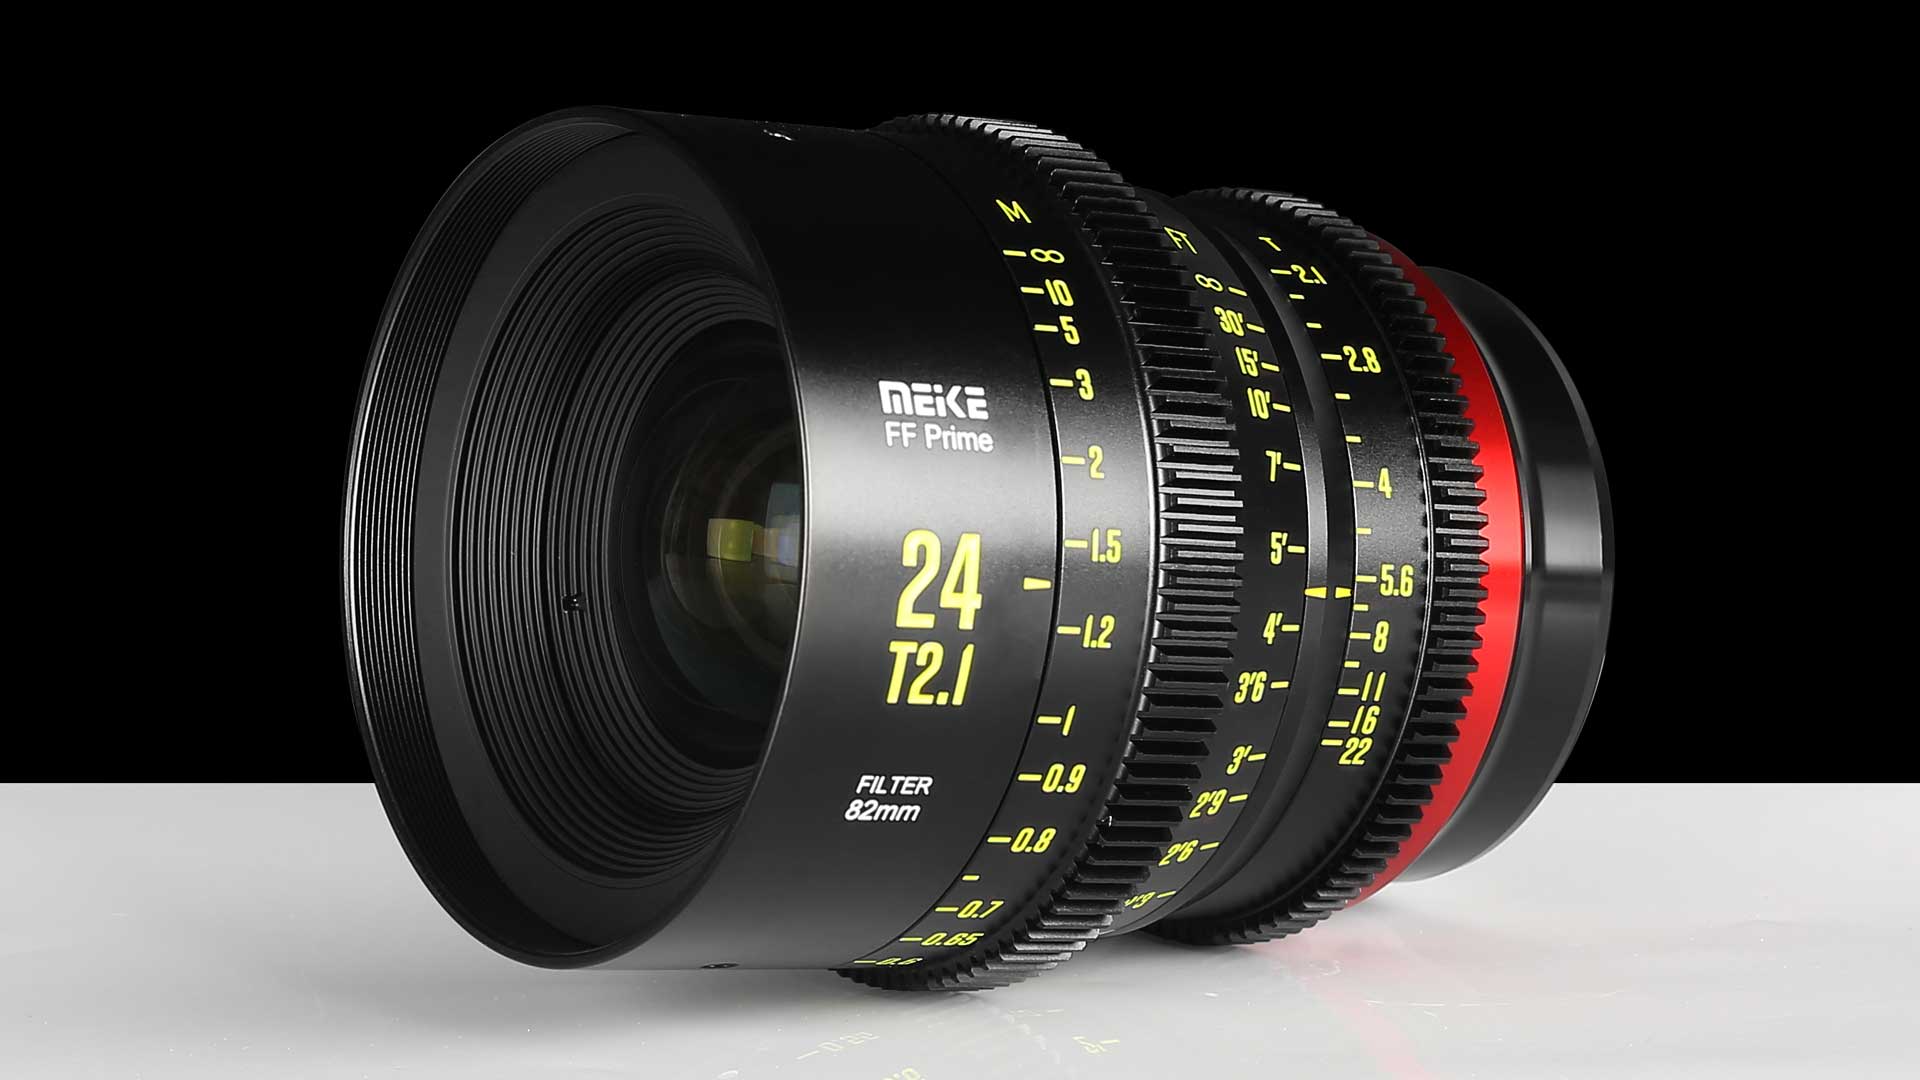 Meikeフルフレーム用シネレンズ「24mm T2.1」を発表 | CineD